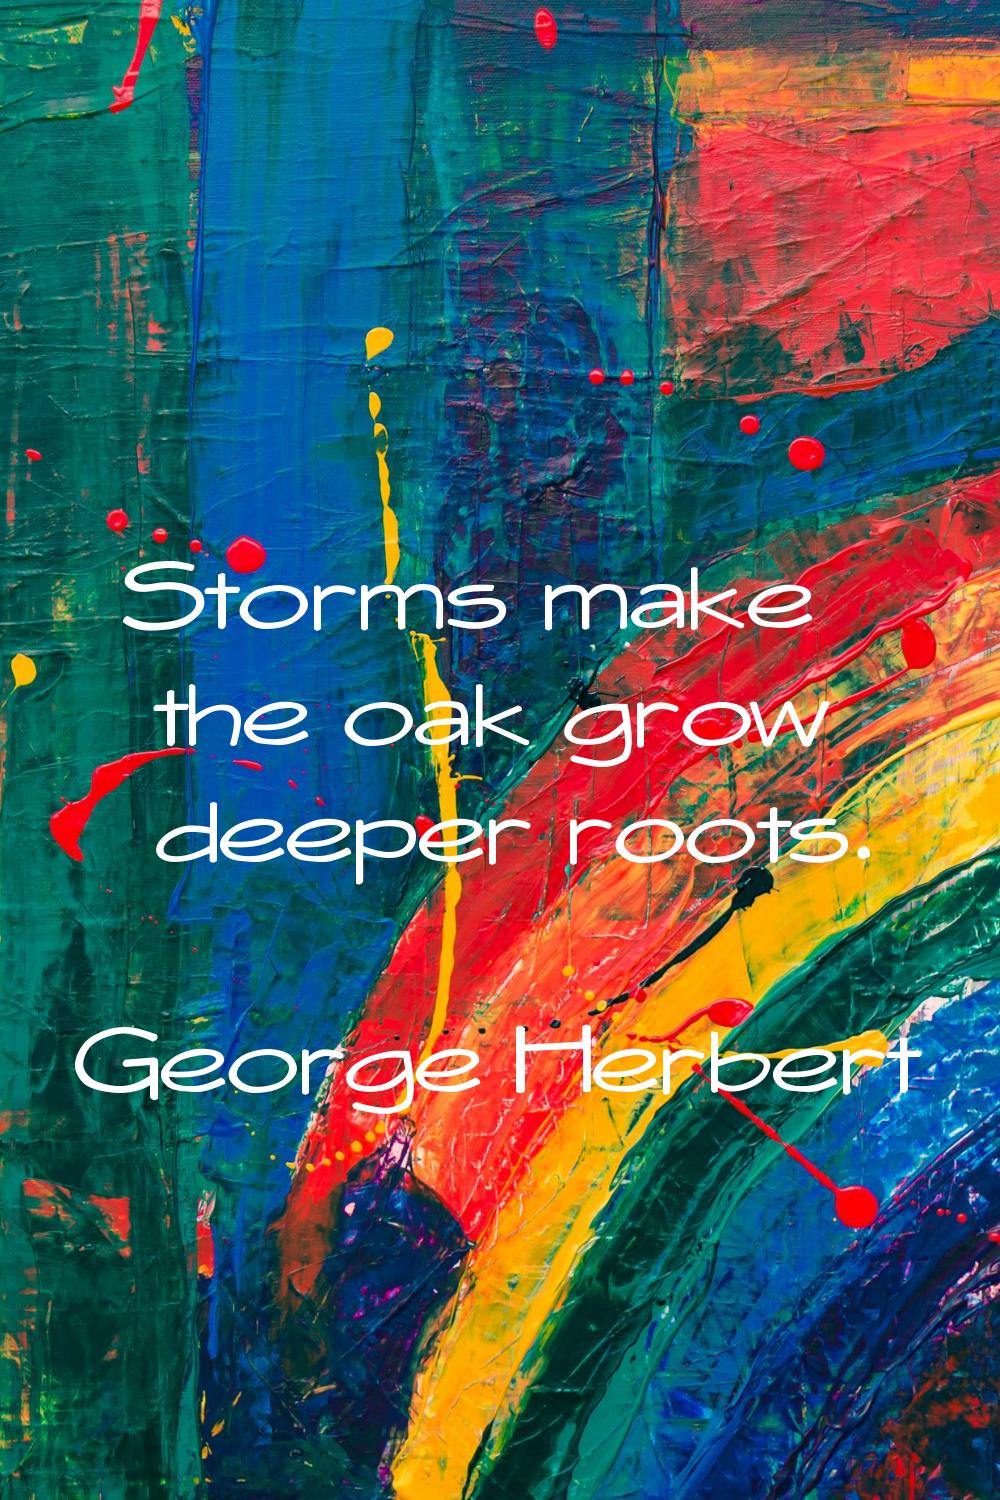 Storms make the oak grow deeper roots.